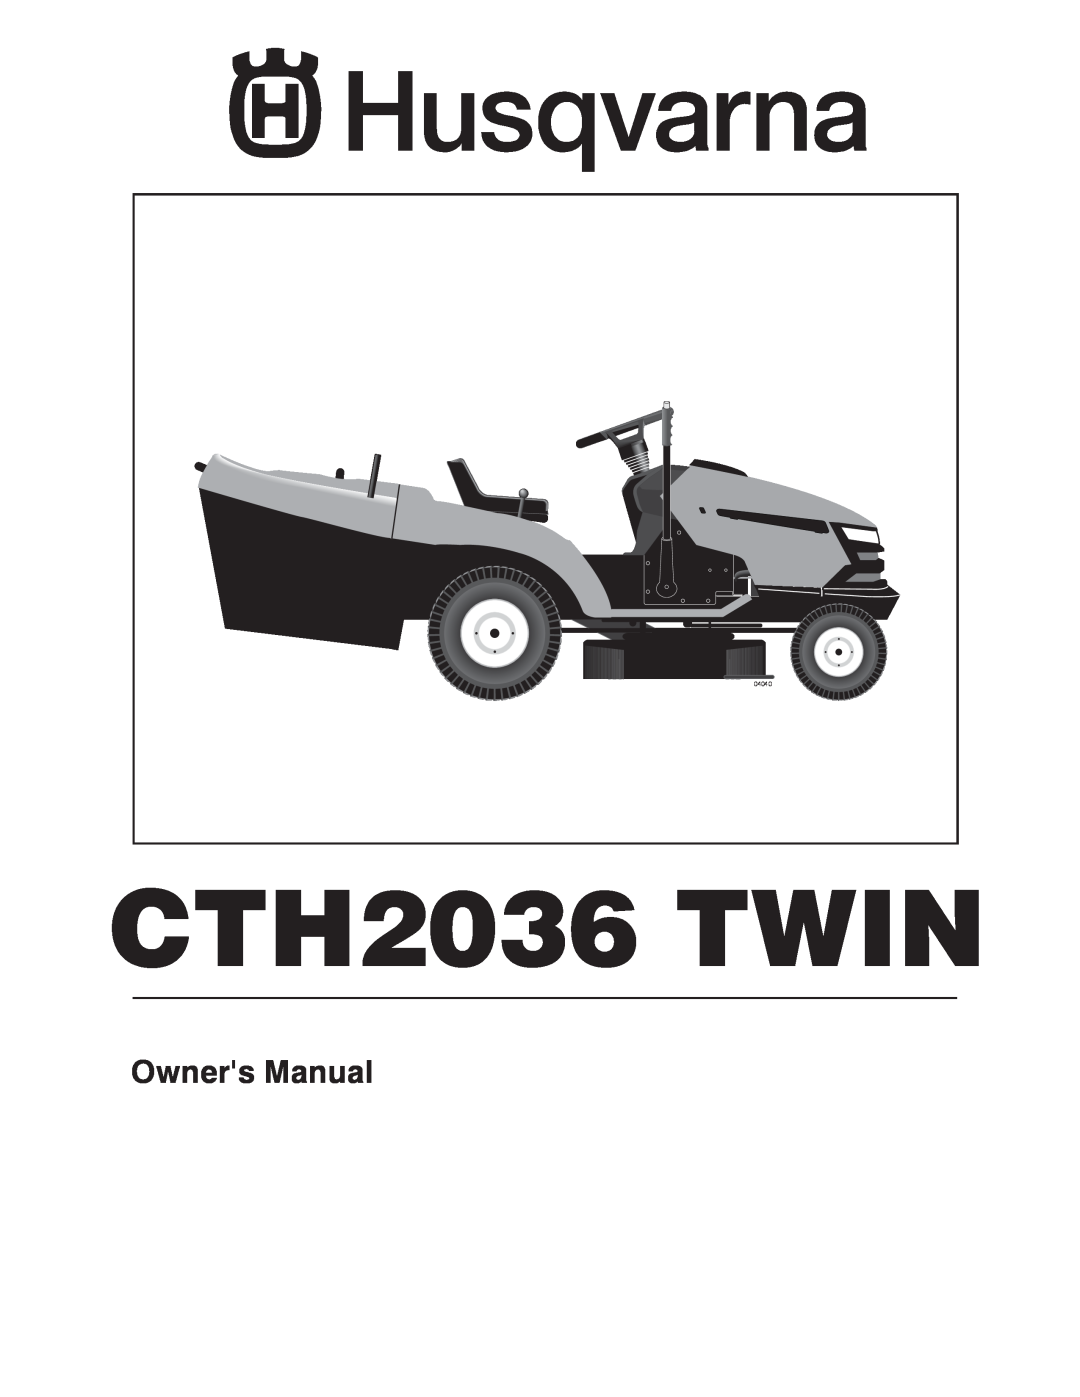 Husqvarna owner manual CTH2036 TWIN, 04040 